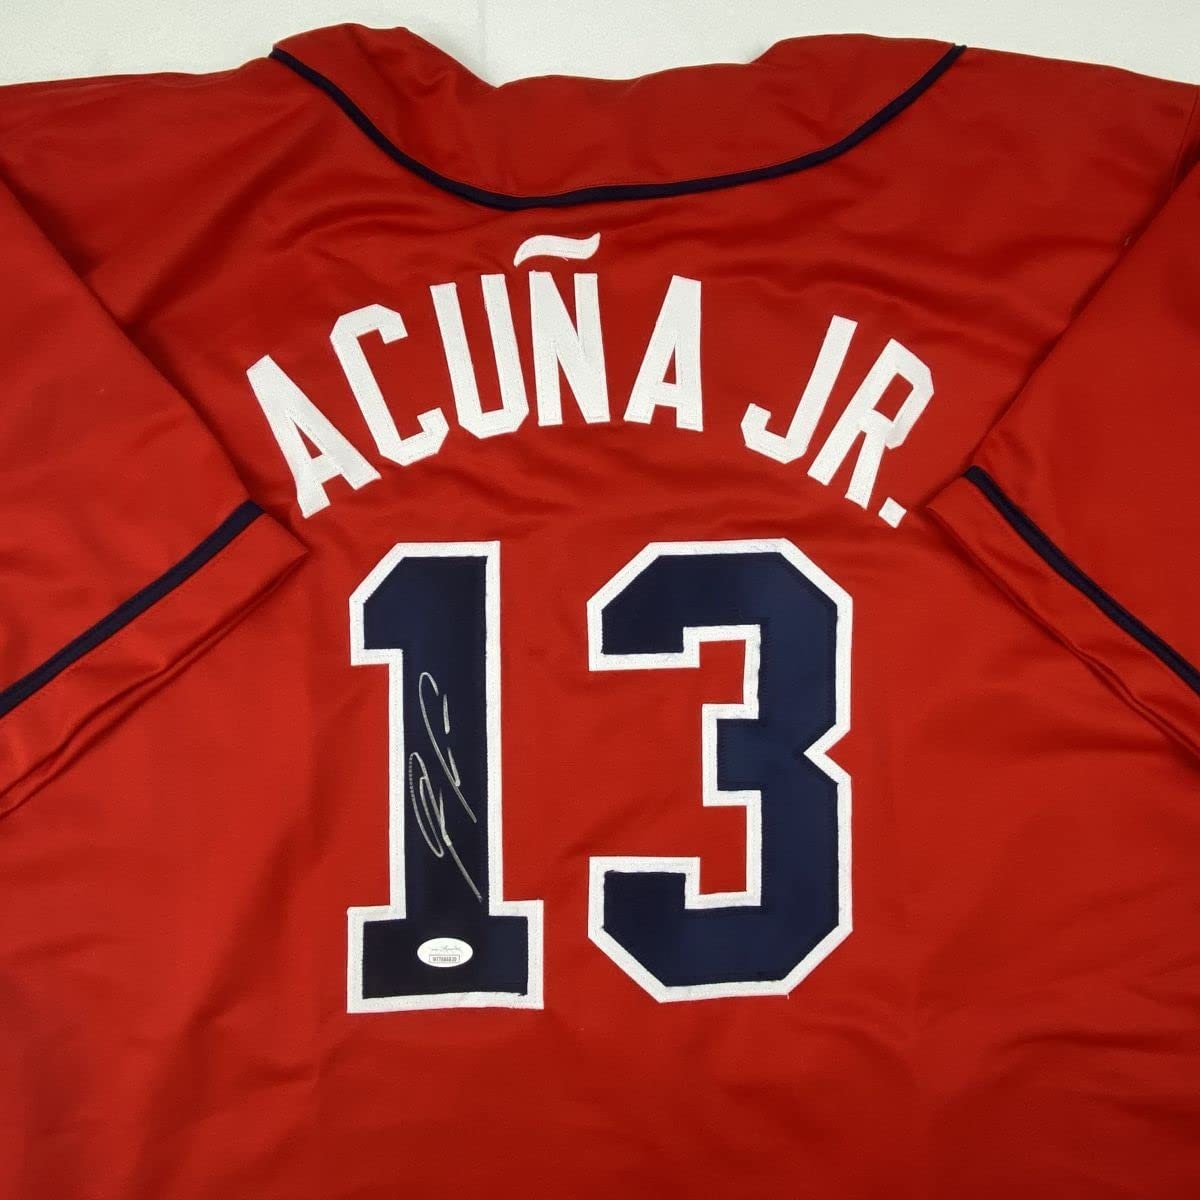 Ronald Acuna Jr. Signed Authentic World Series Braves Framed Jersey JSA COA